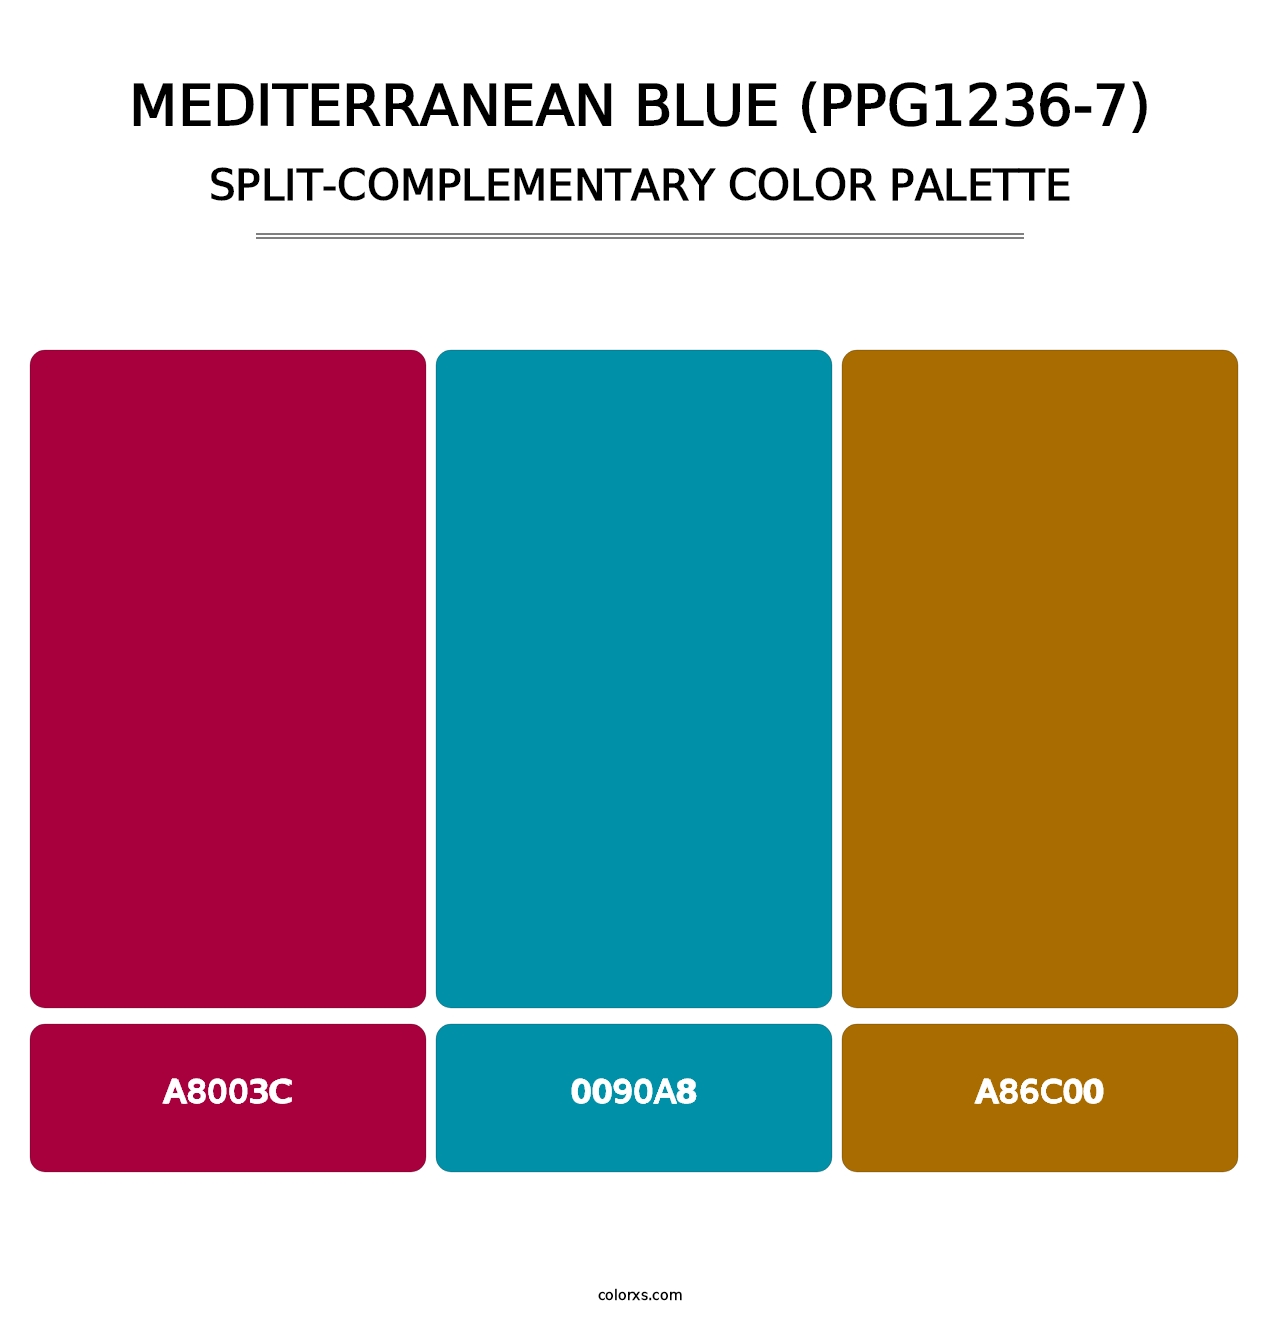 Mediterranean Blue (PPG1236-7) - Split-Complementary Color Palette